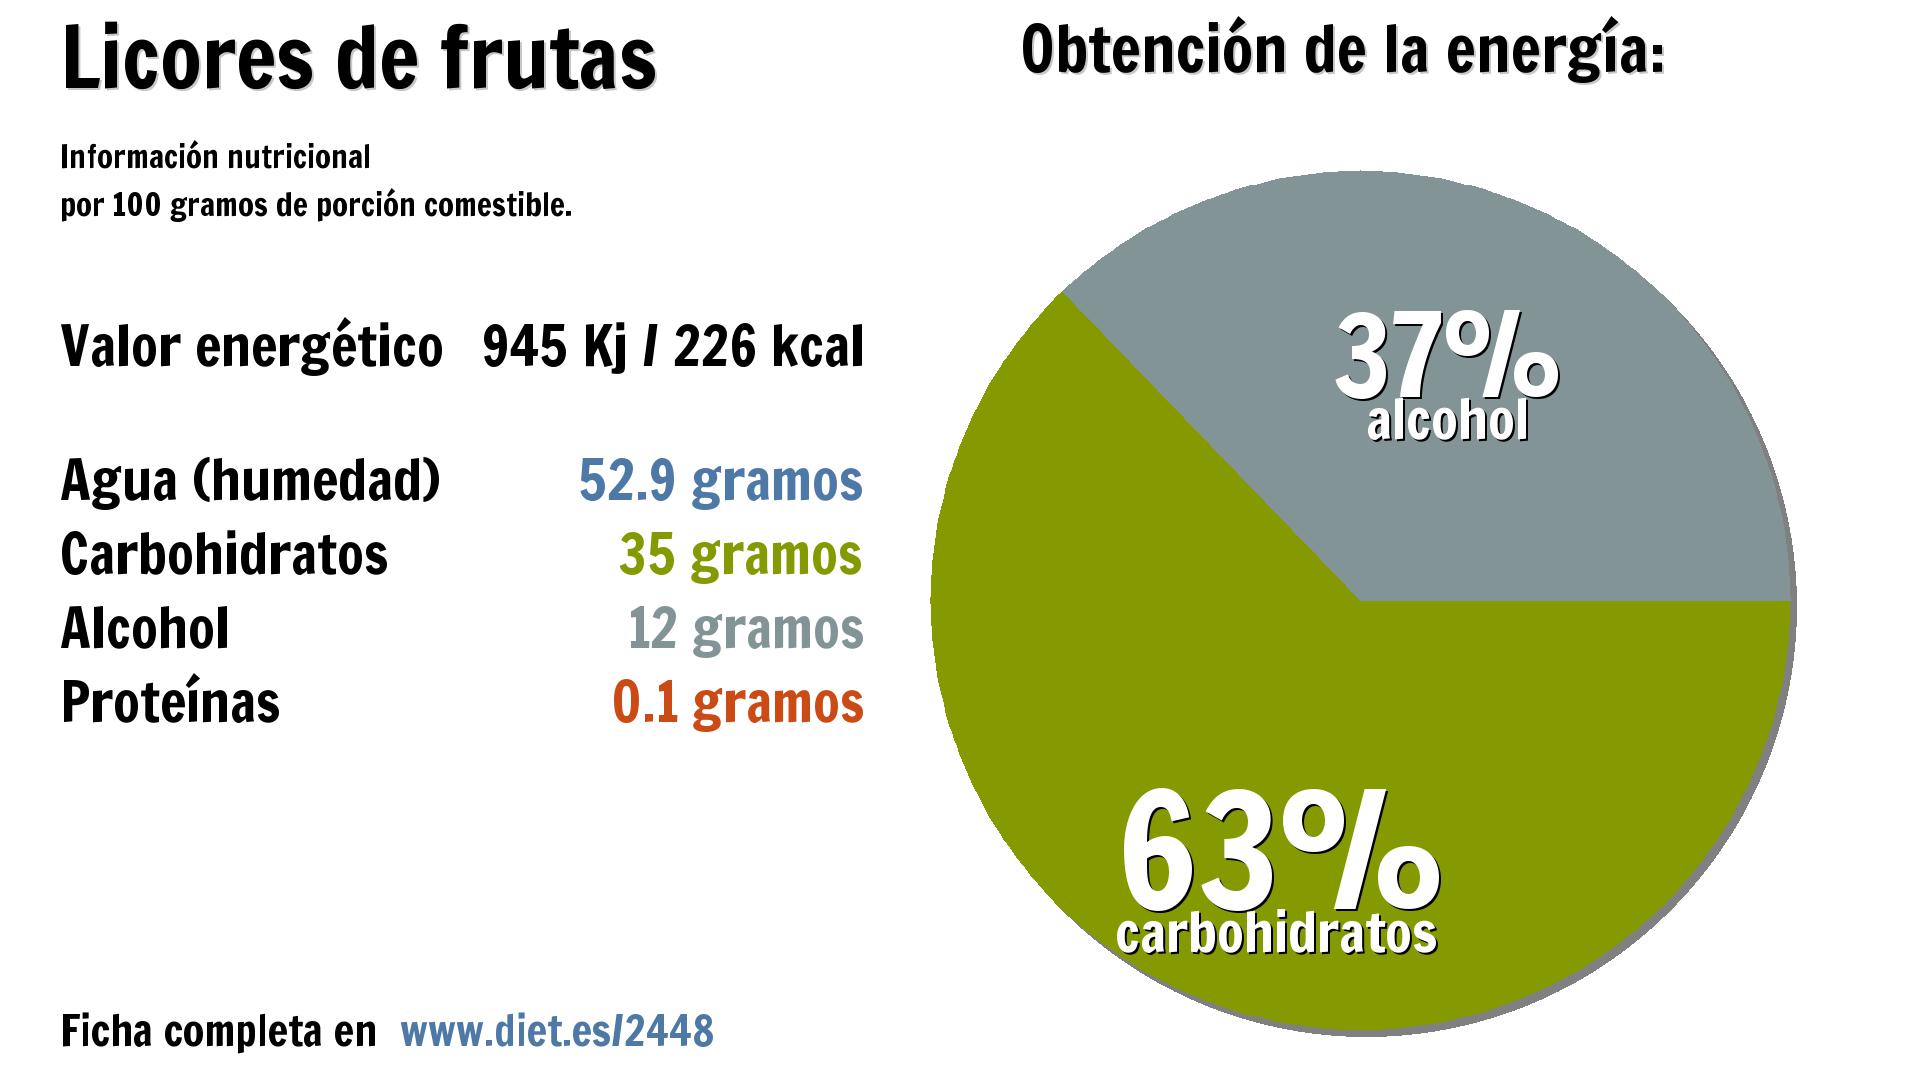 Licores de frutas: energía 945 Kj, agua 53 g., carbohidratos 35 g. y alcohol 12 g.